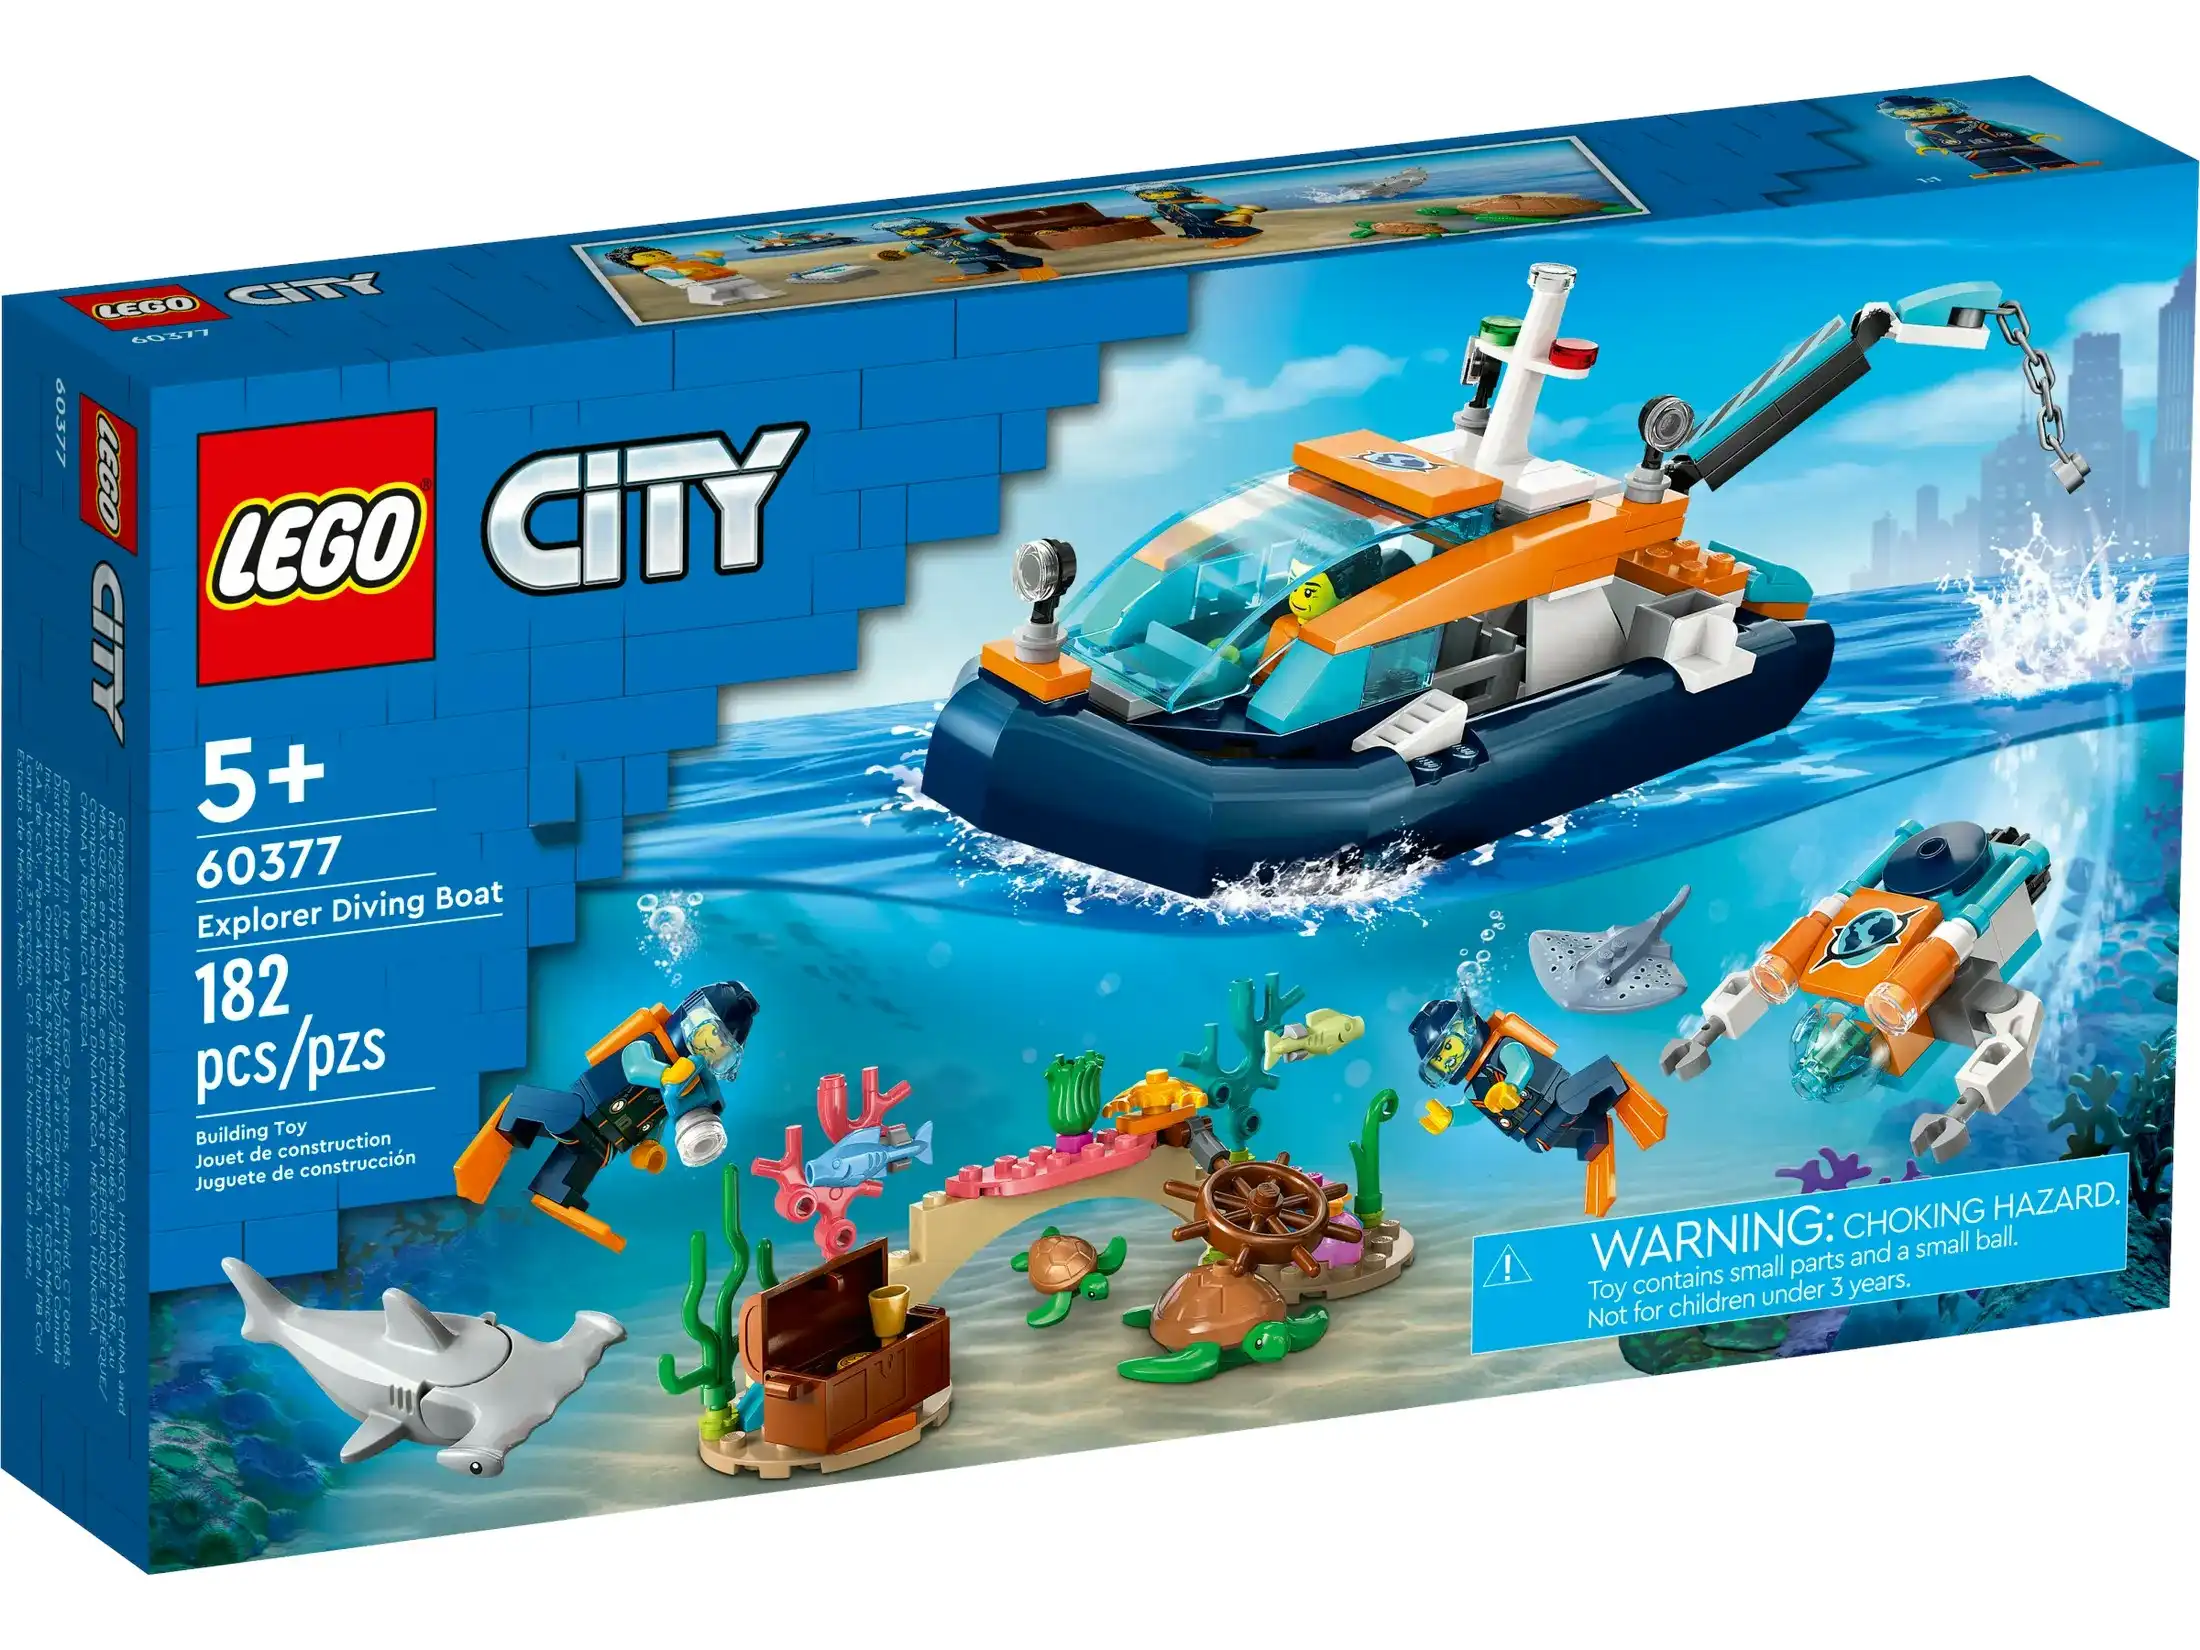 LEGO 60377 Explorer Diving Boat - City